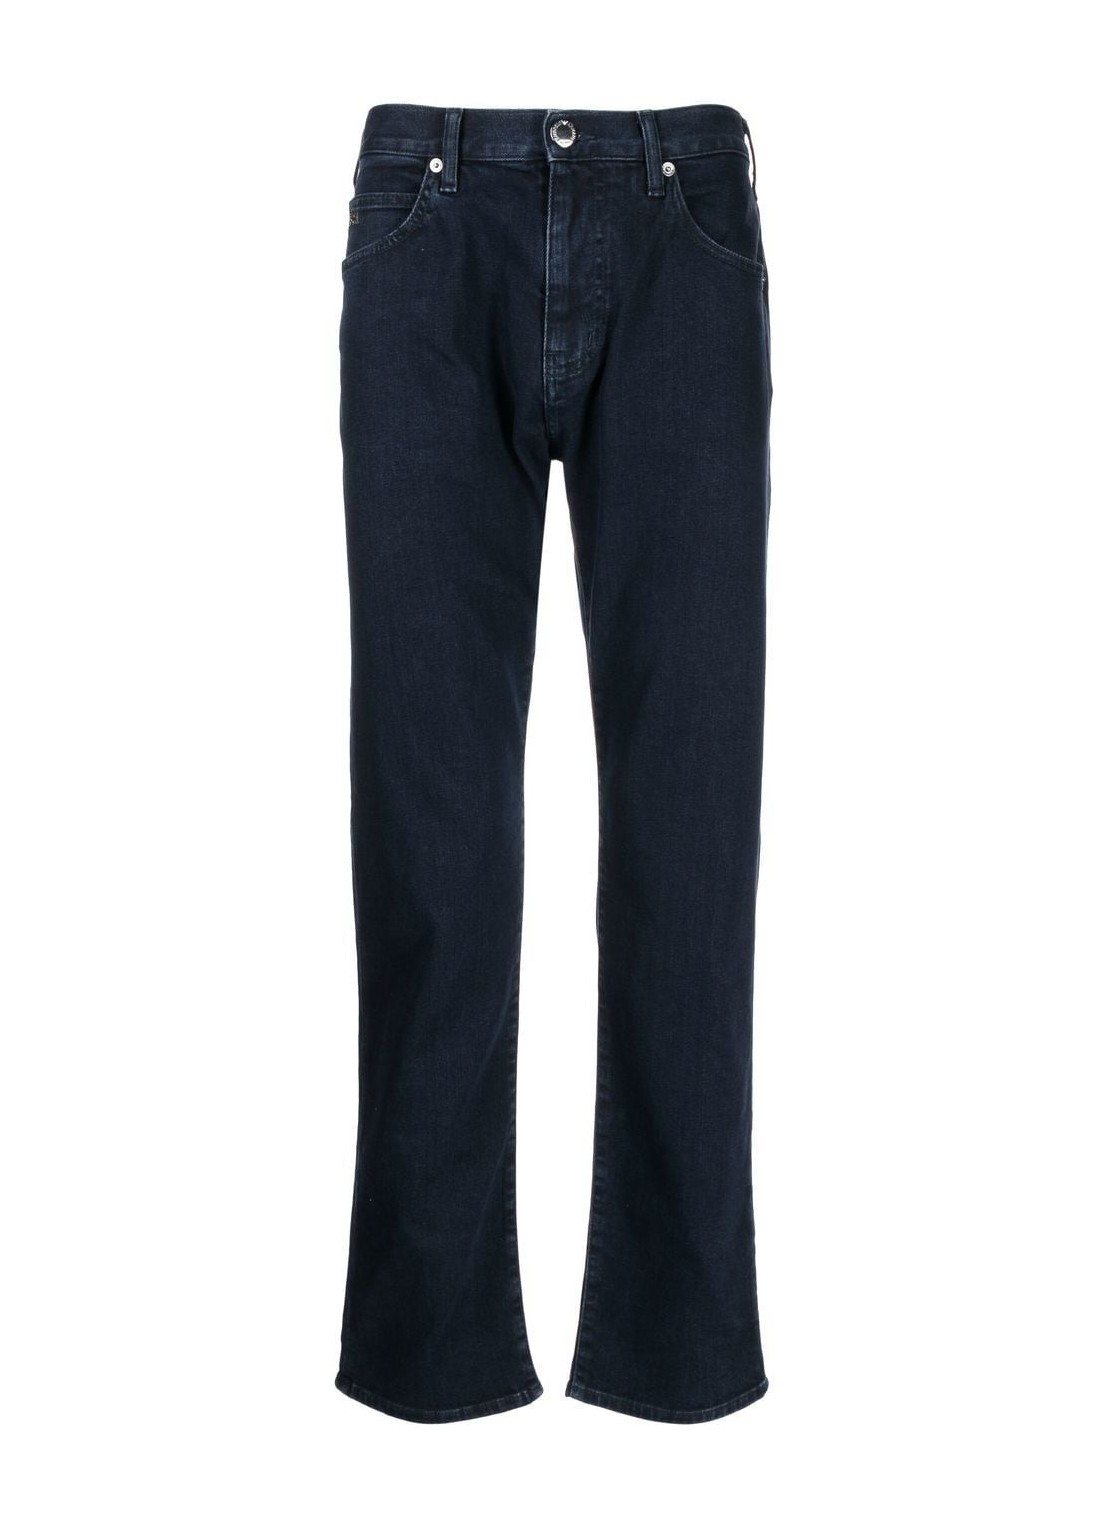 Pantalon jeans emporio armani denim man j45 8n1j451g0iz 0942 talla Azul
 